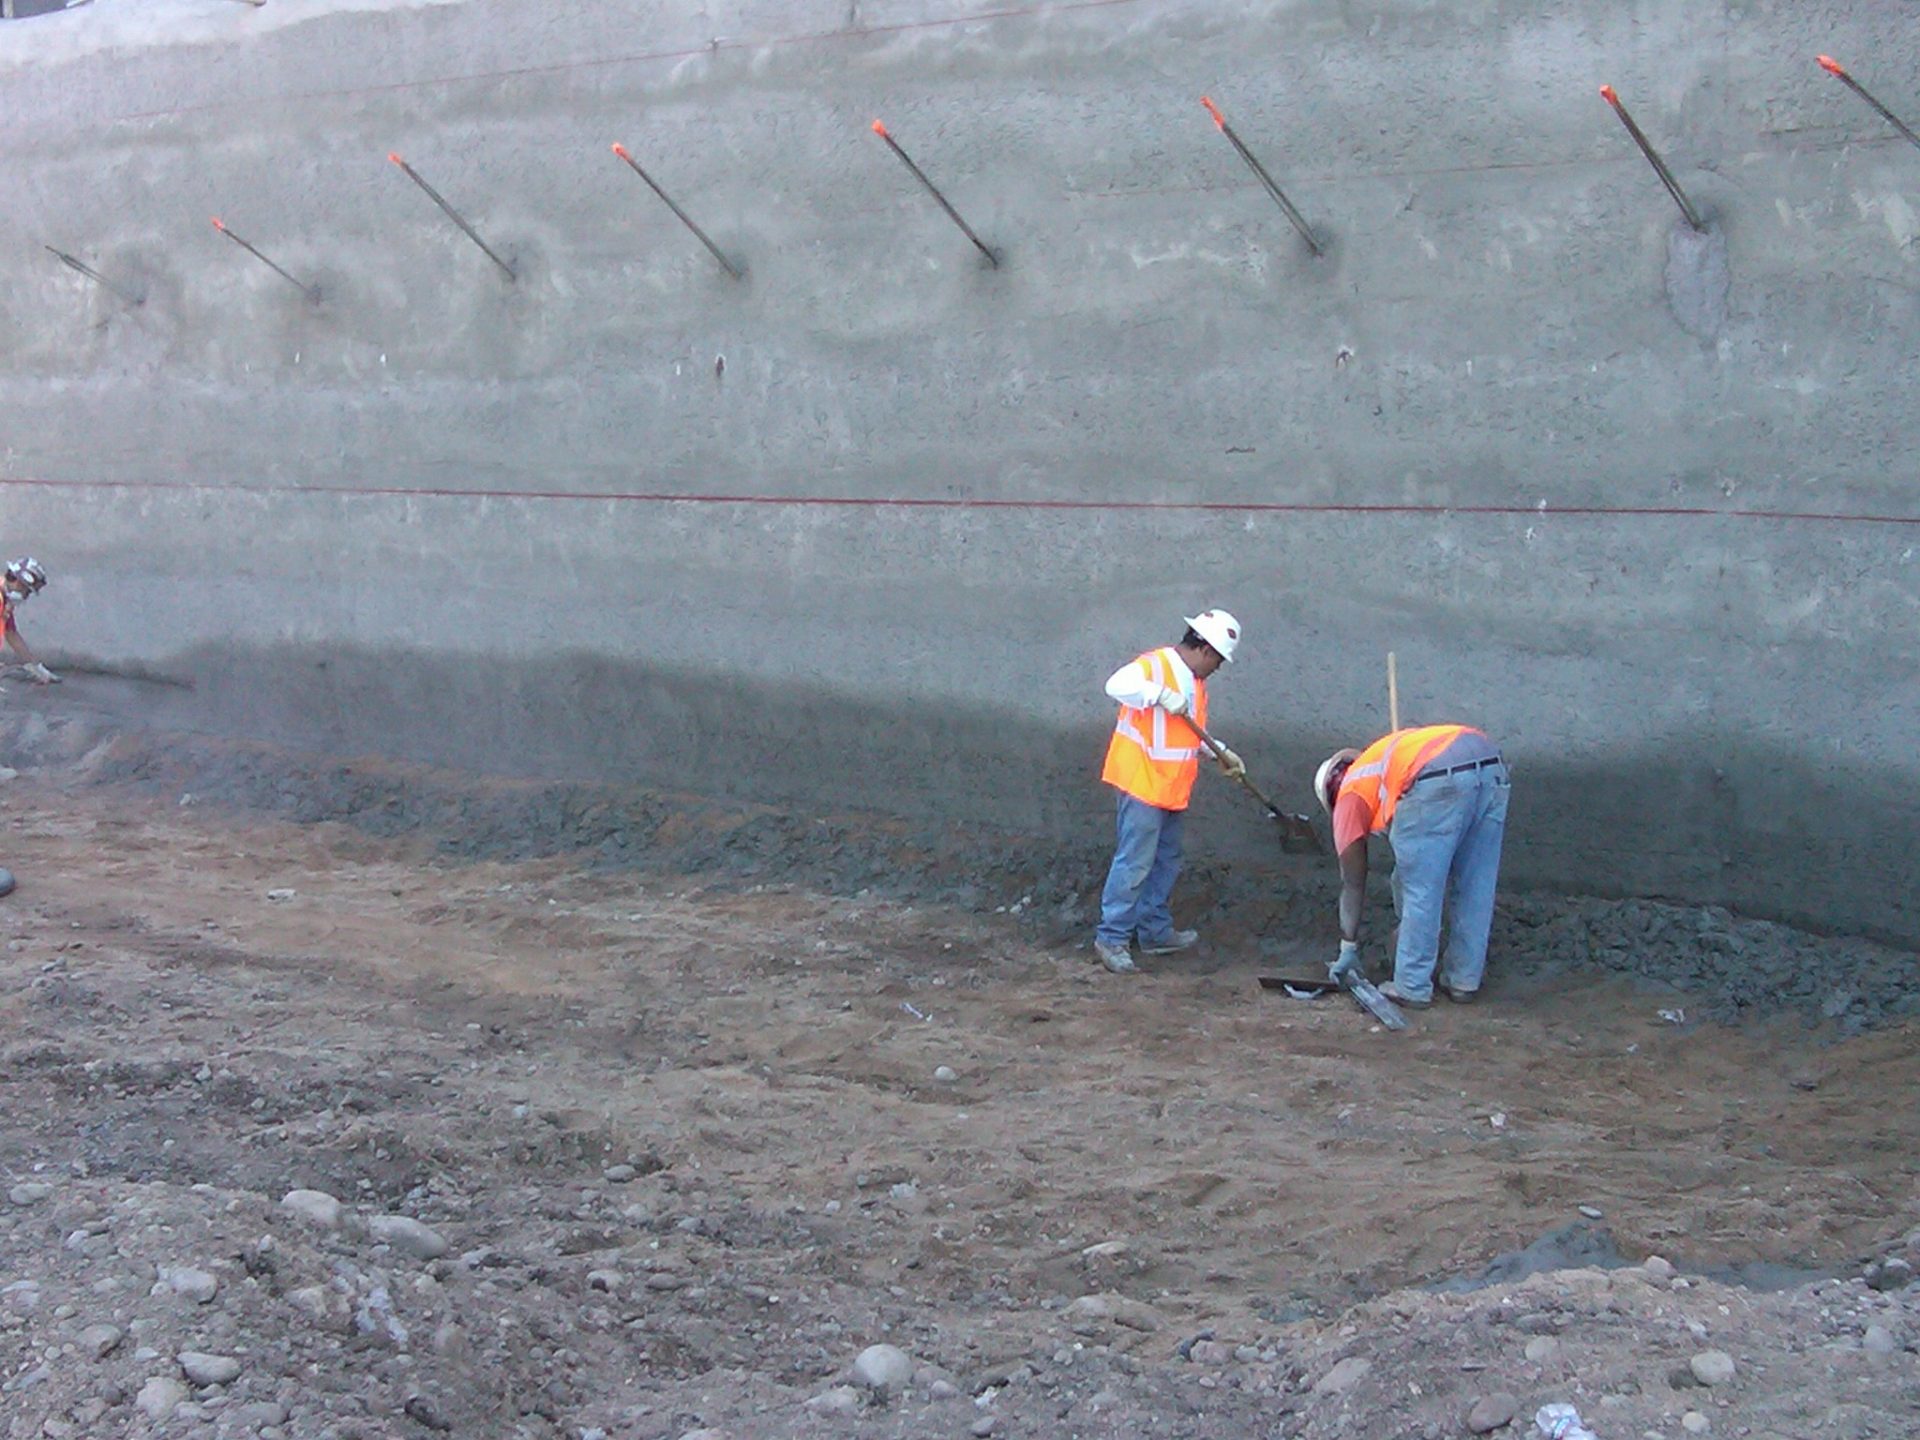 Tiebacks — Soil Engineering Construction, Inc.